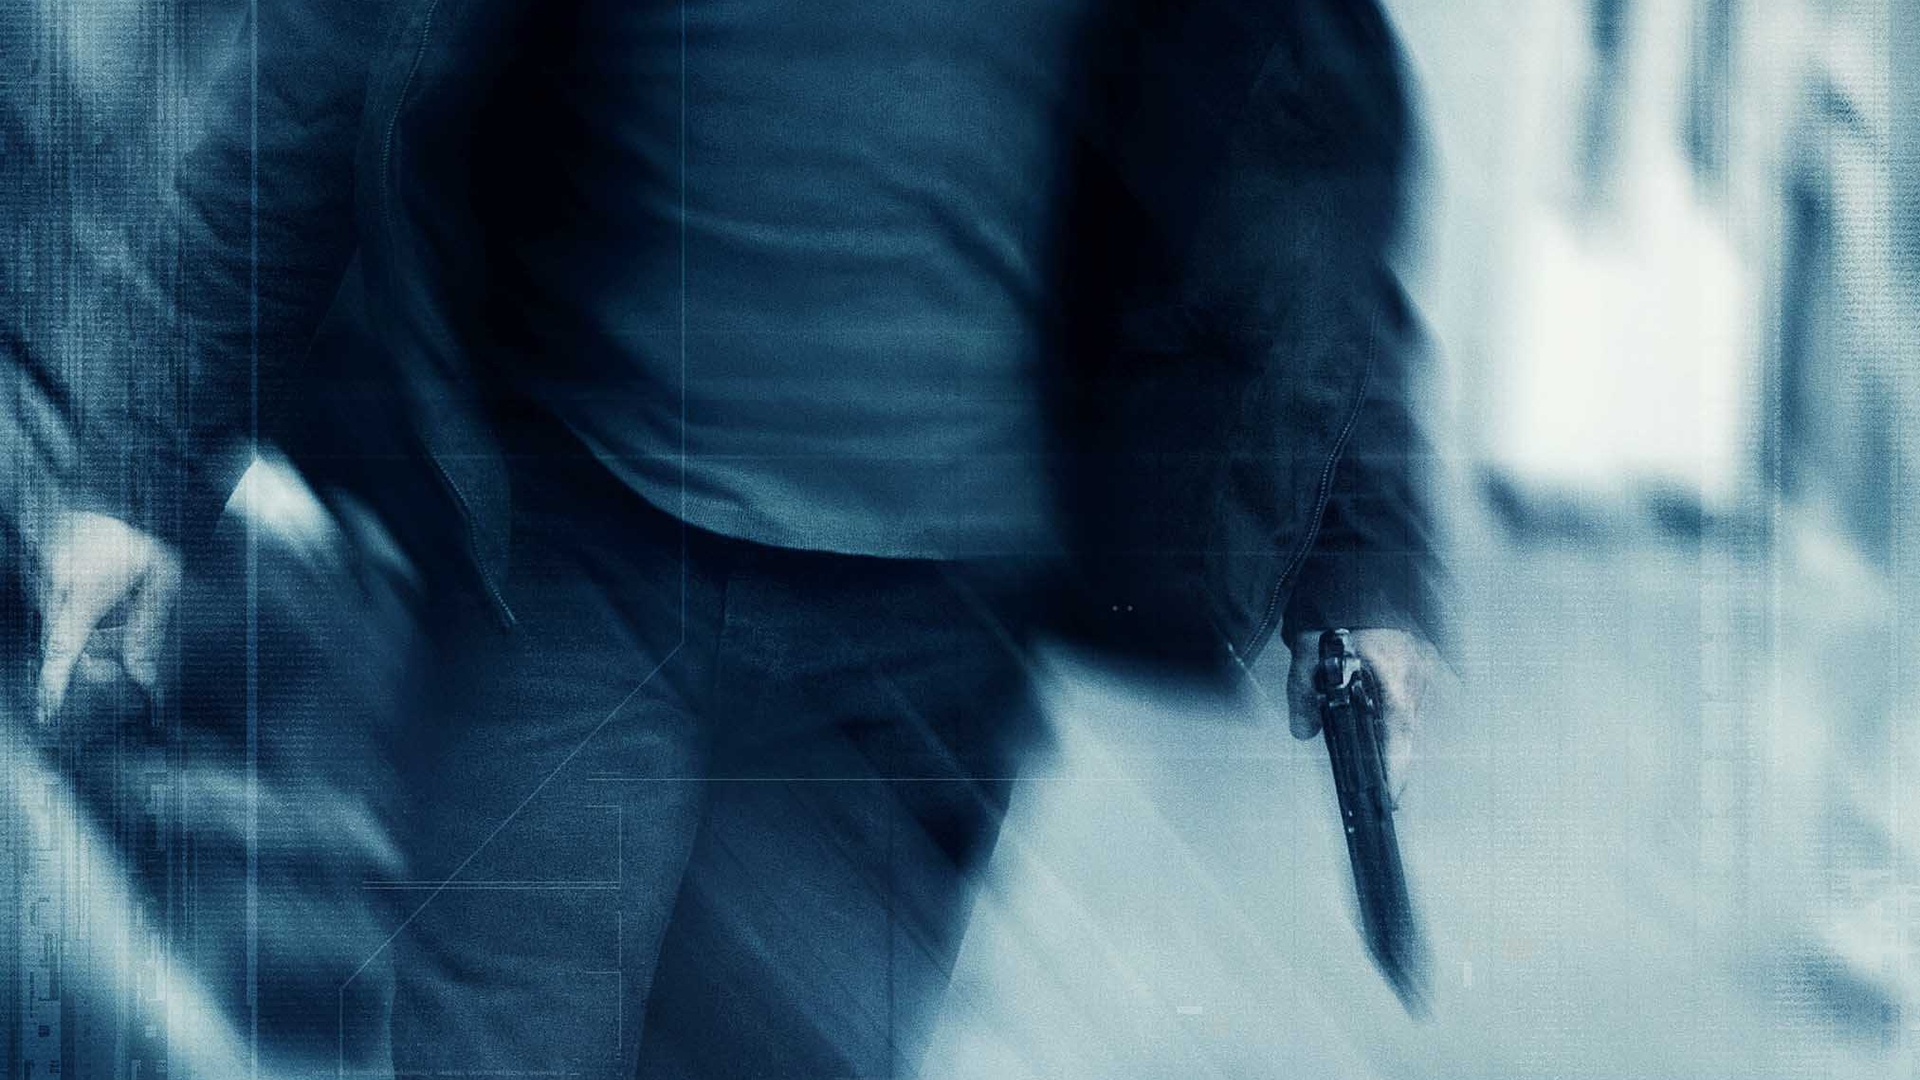 Bourne poster